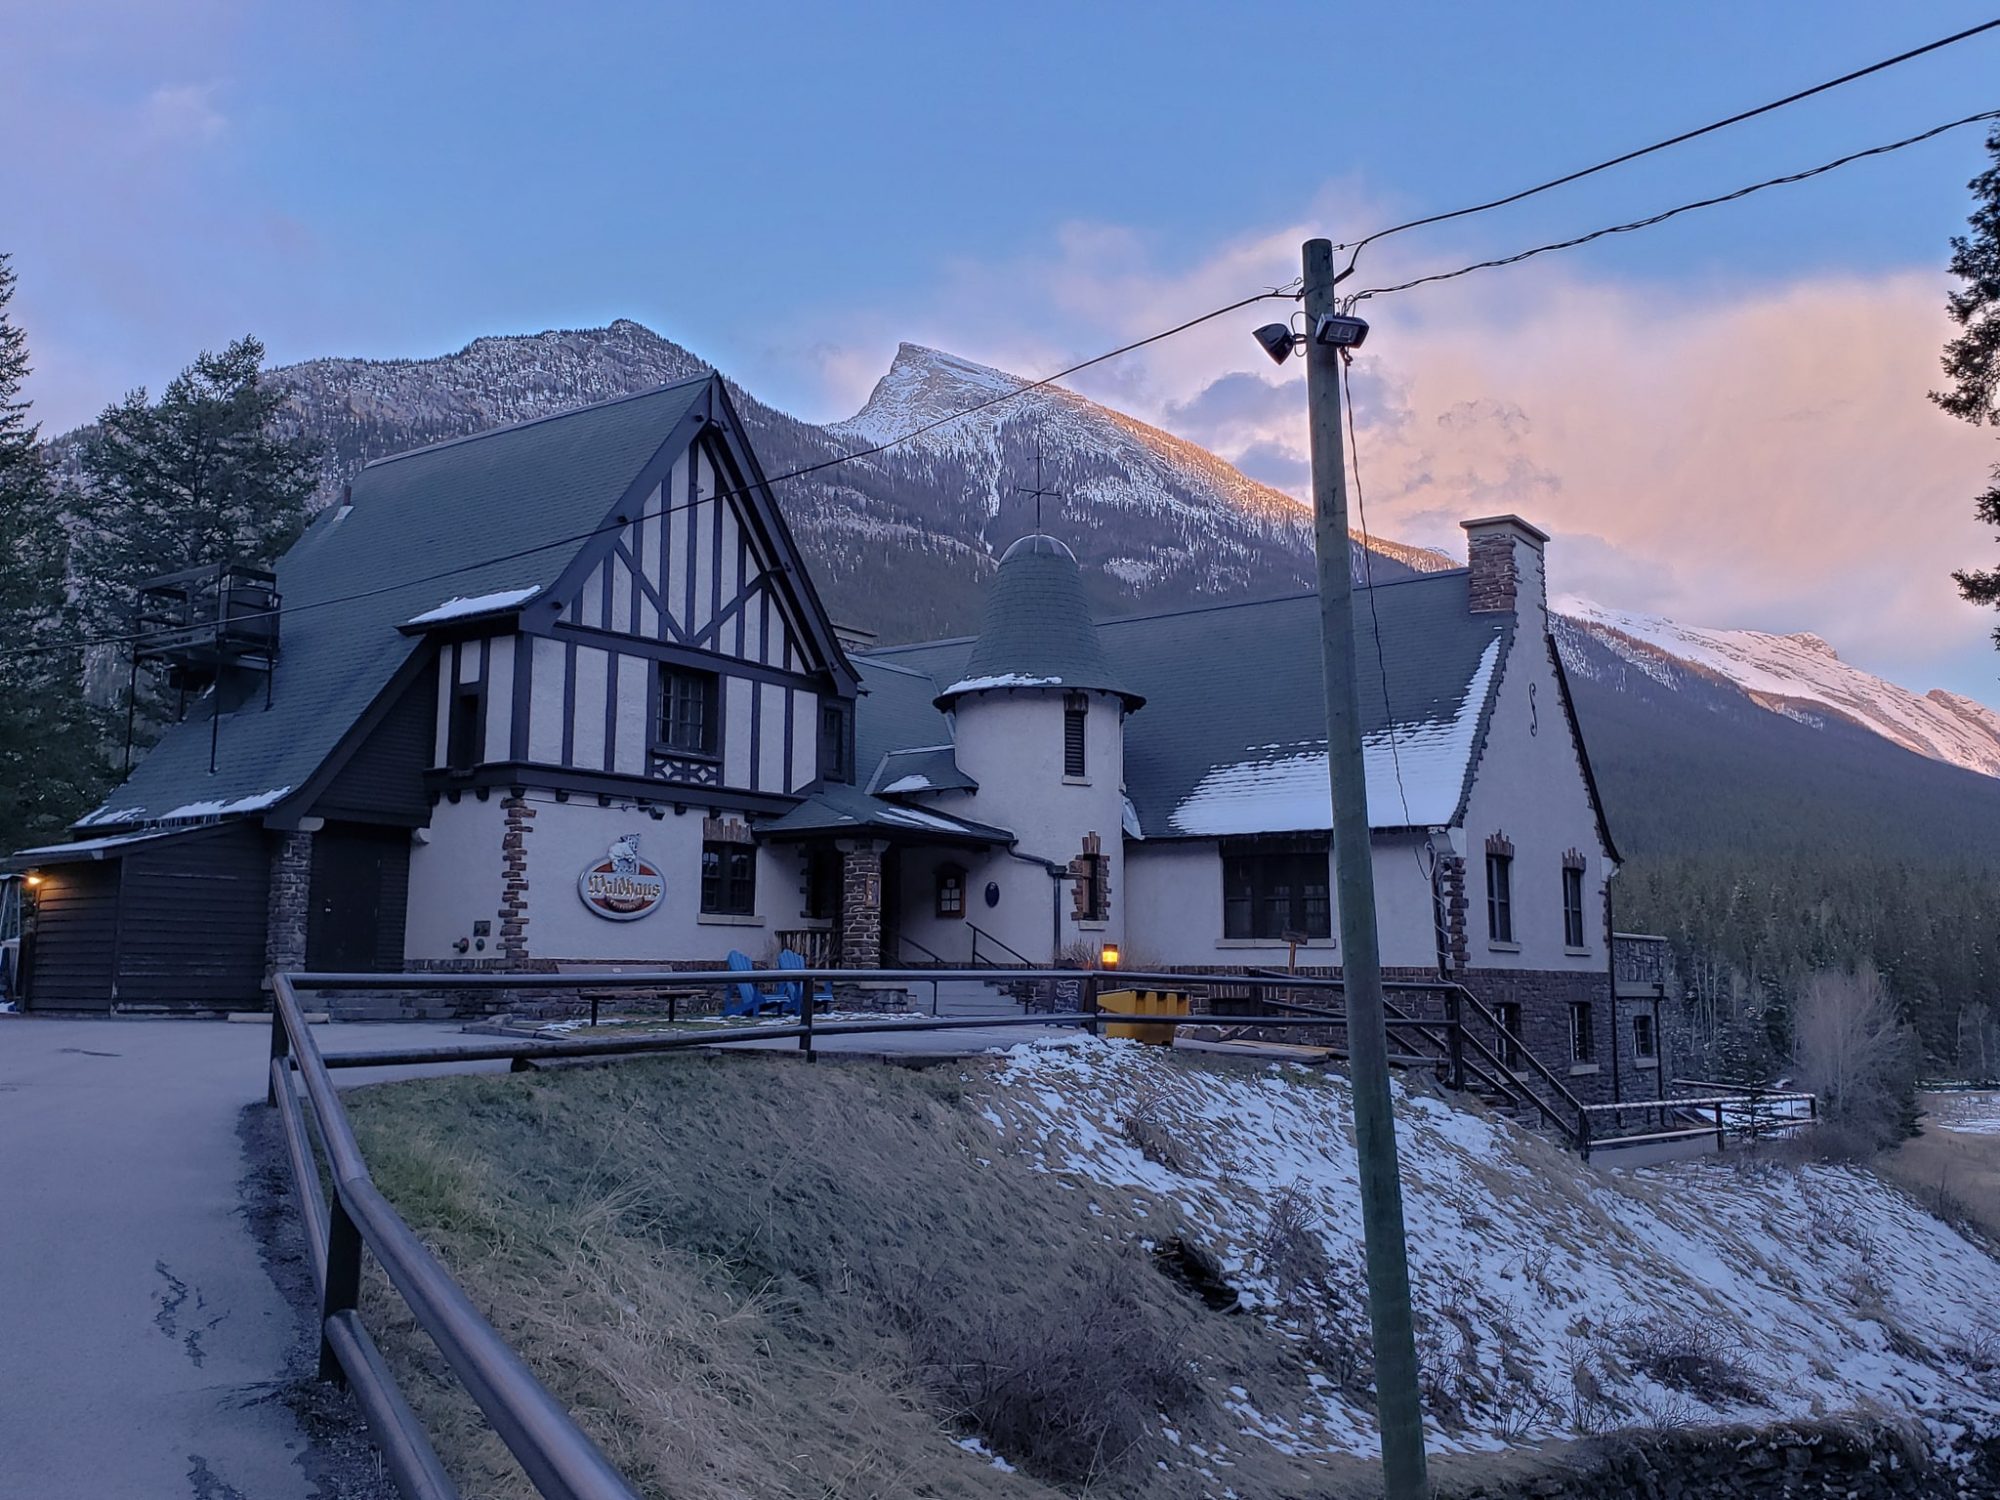 Waldhaus pub and restaurant, Banff